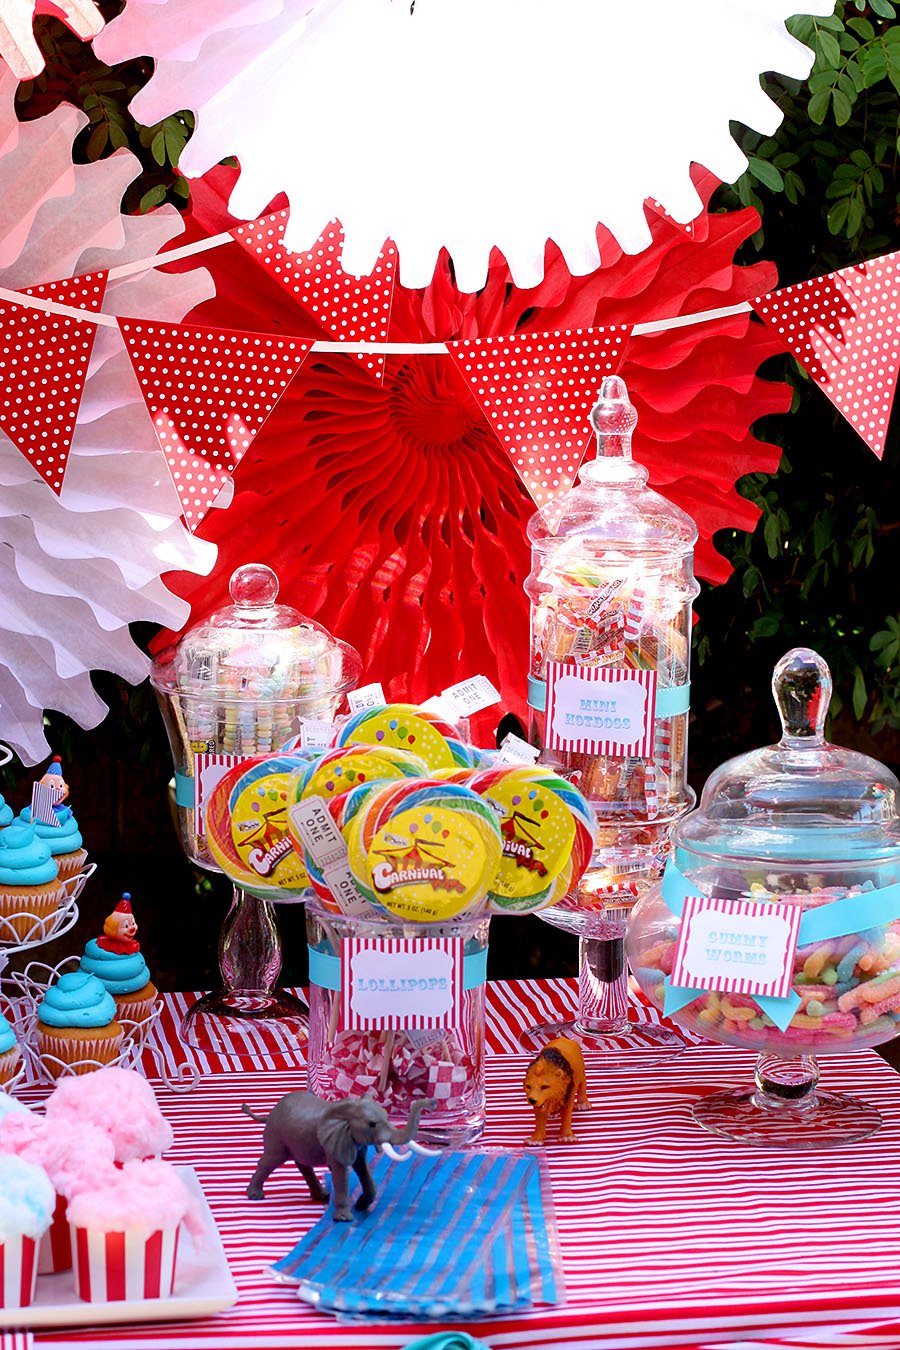 Free Candy Buffet Circus Party Theme Printables via lilblueboo.com